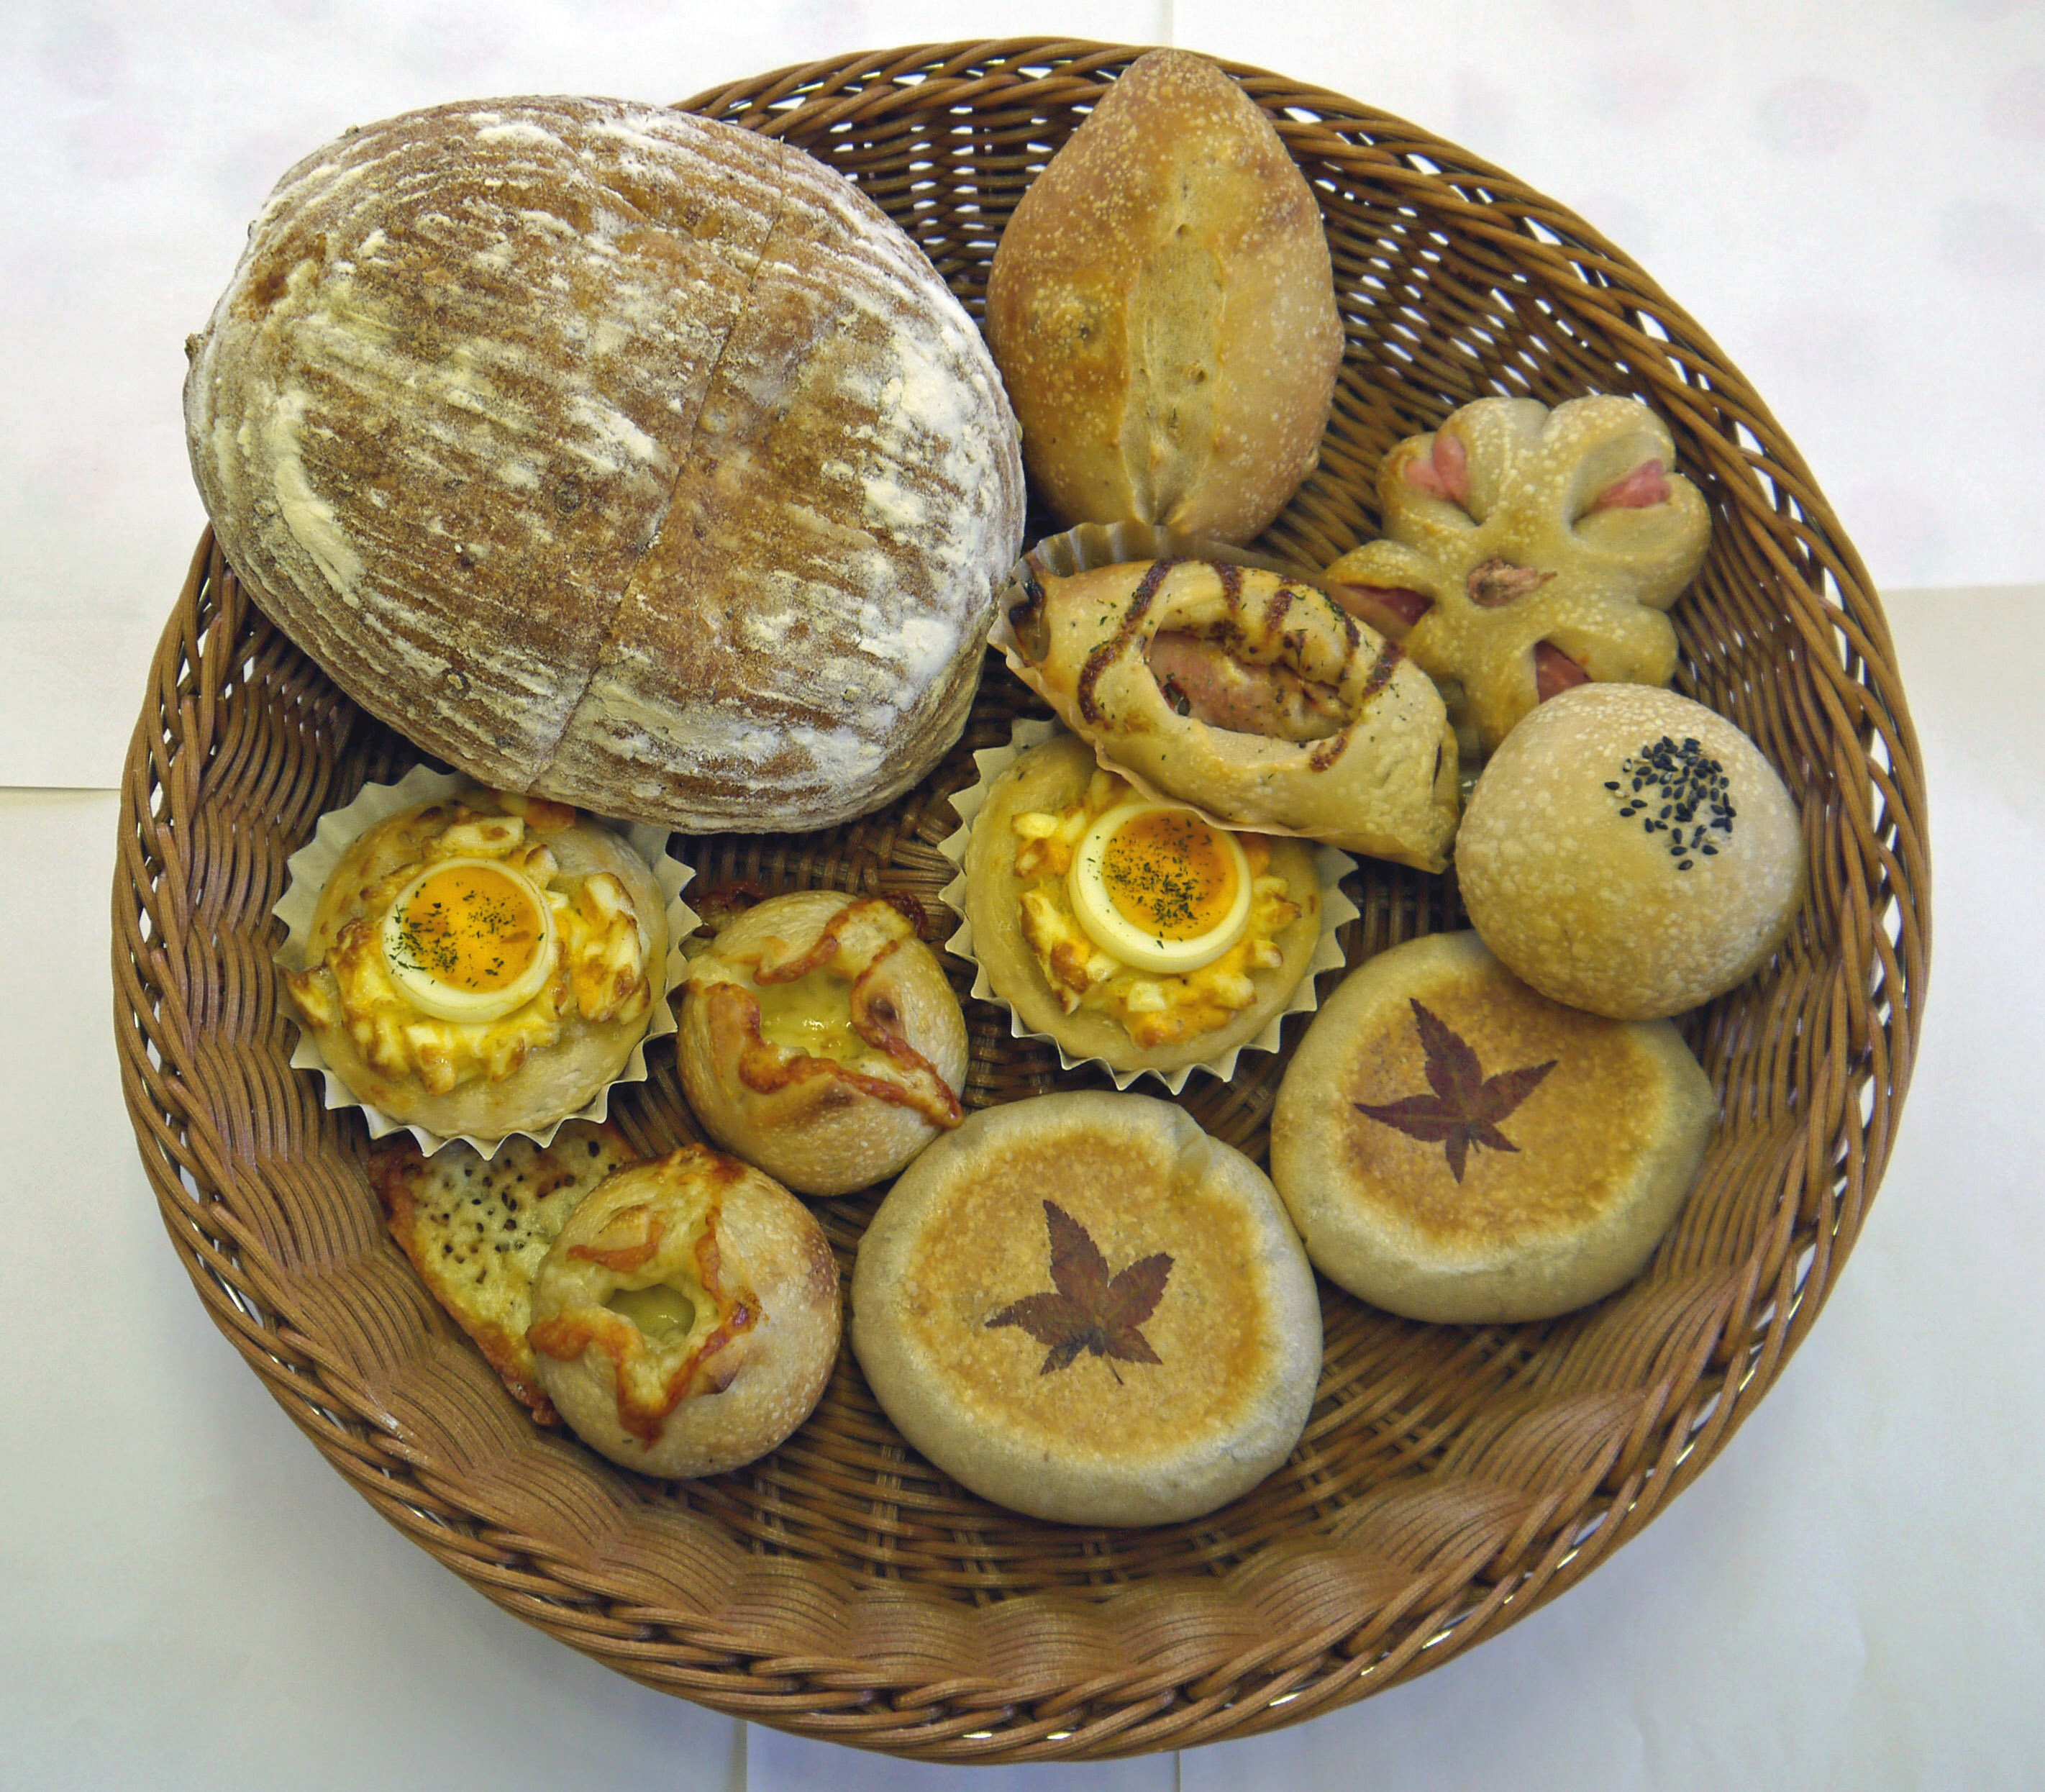  Autumn in Tajimi Three Mountain Climbing Experience with a Bread or Parfait Treat!